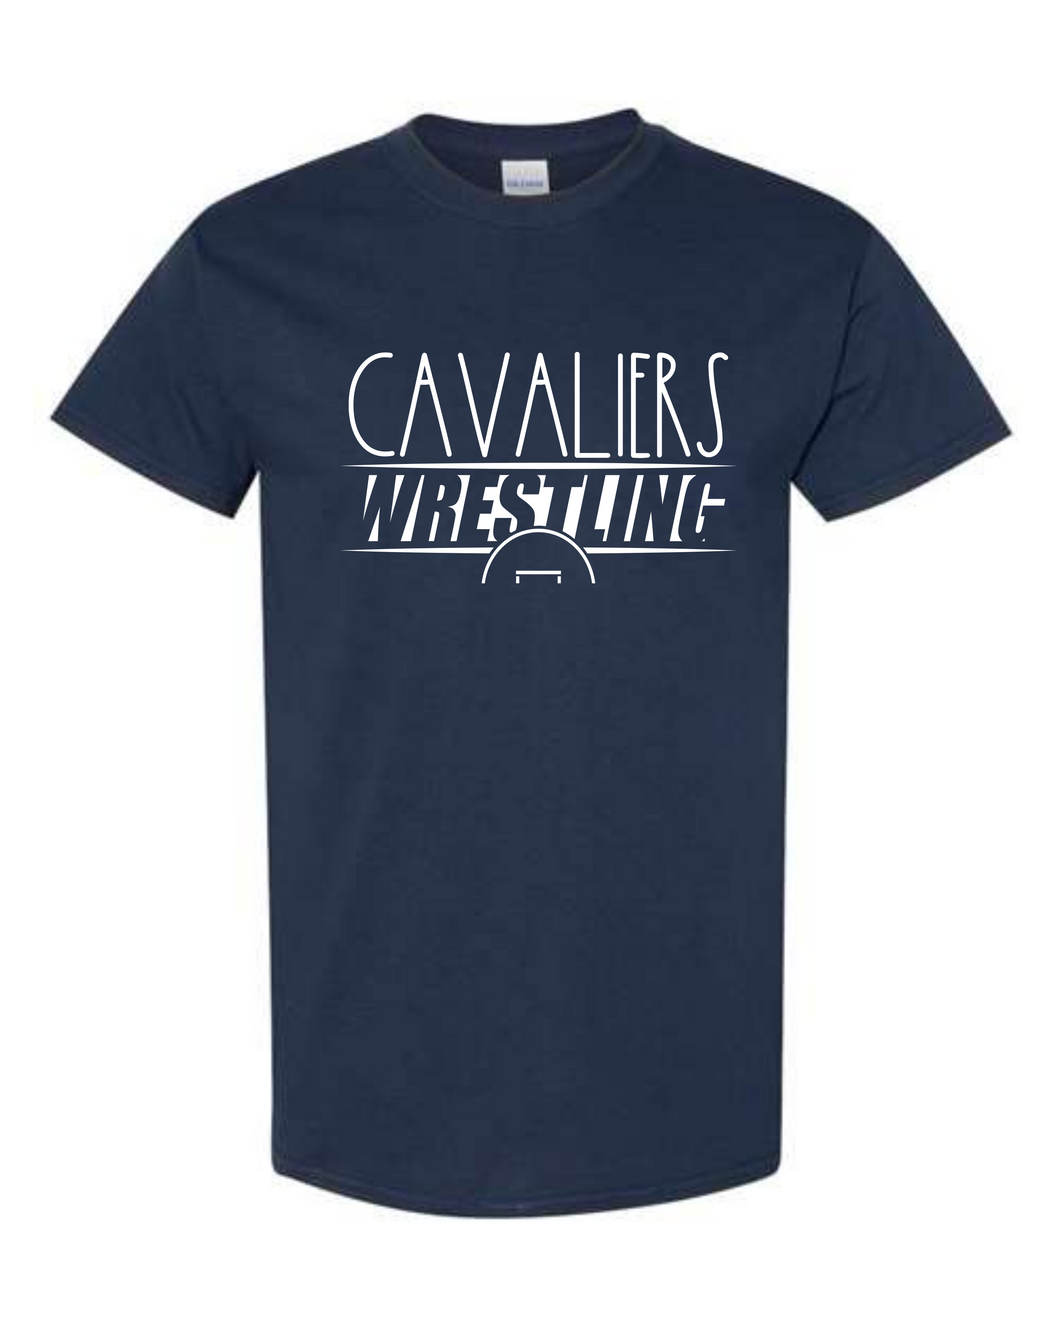 Cavaliers Wrestling Tshirt